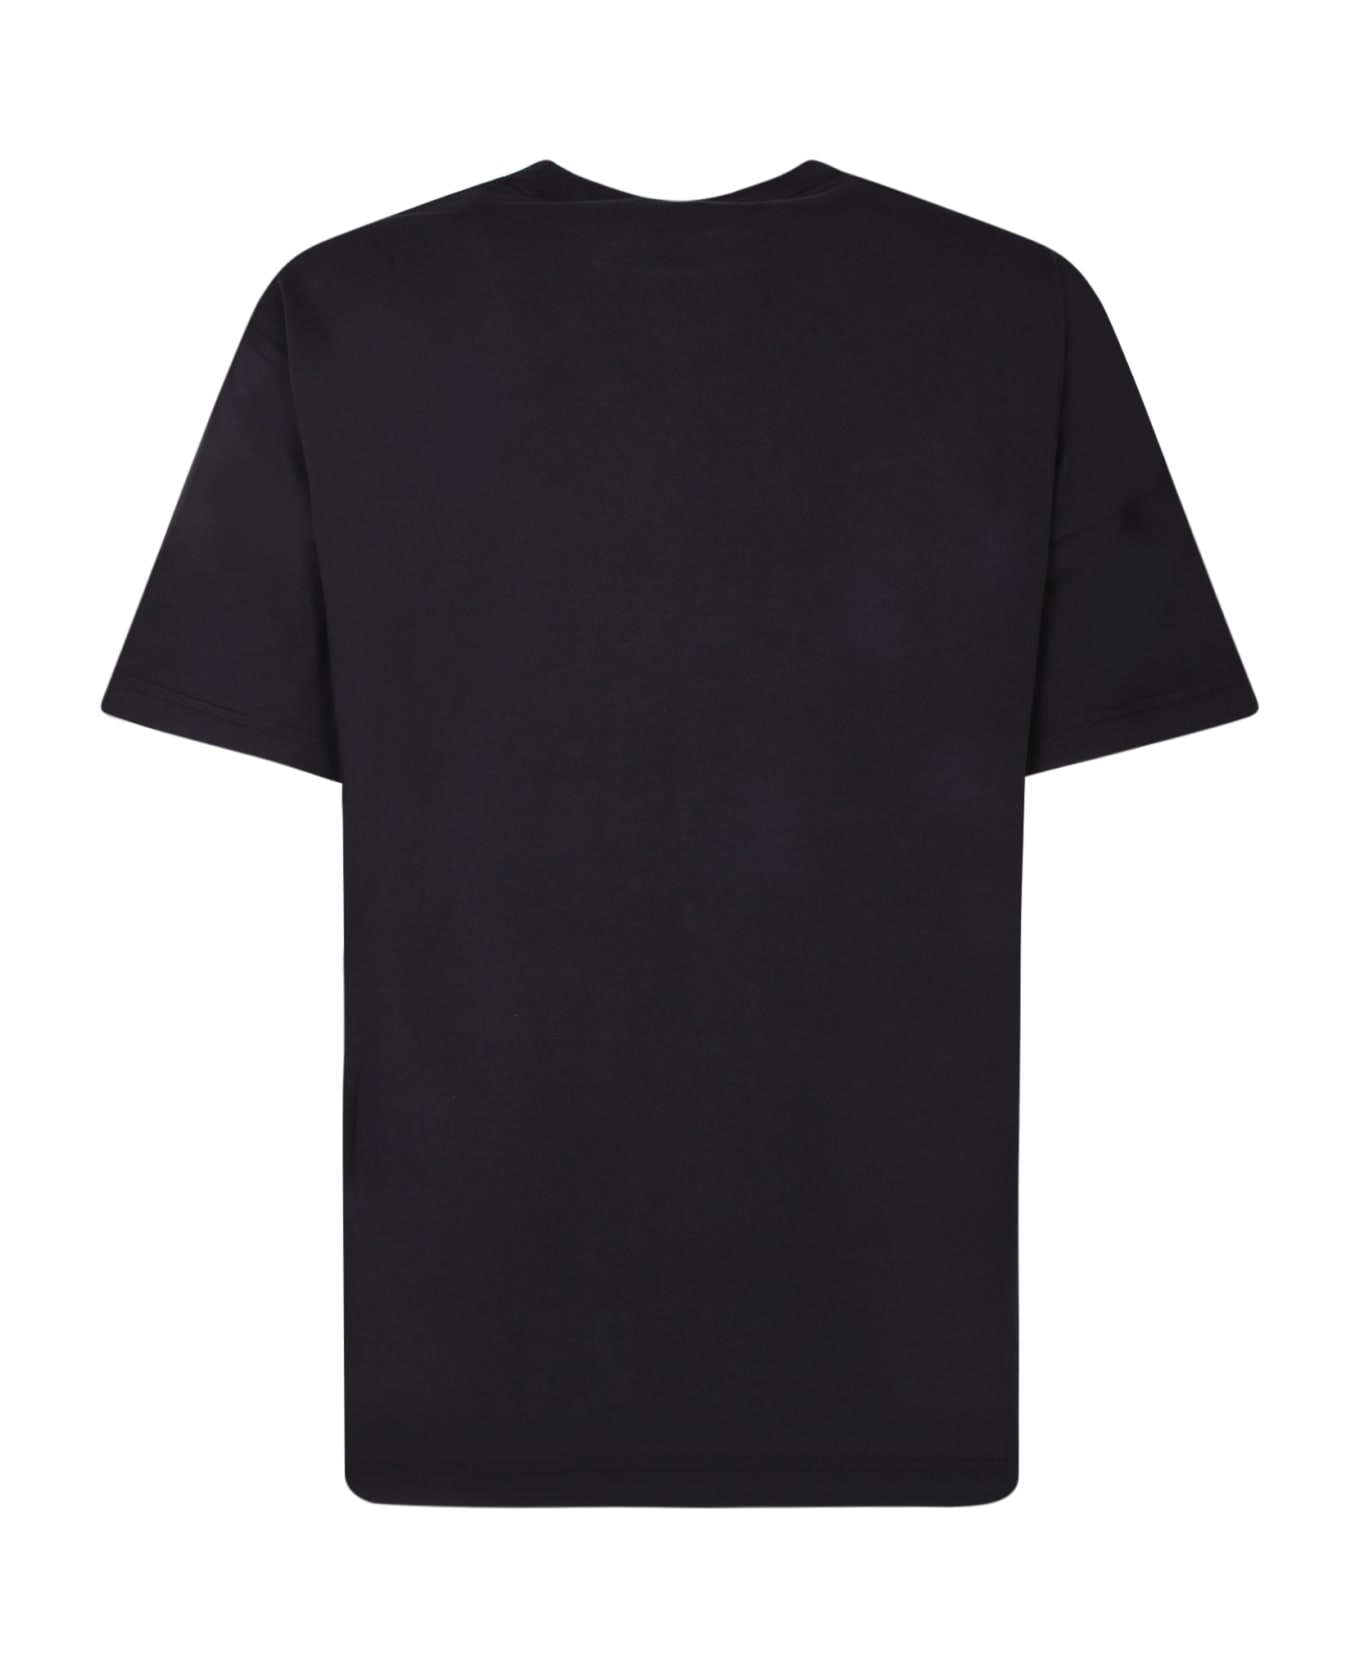 Fuct Crossed Fuct Black T-shirt - Black